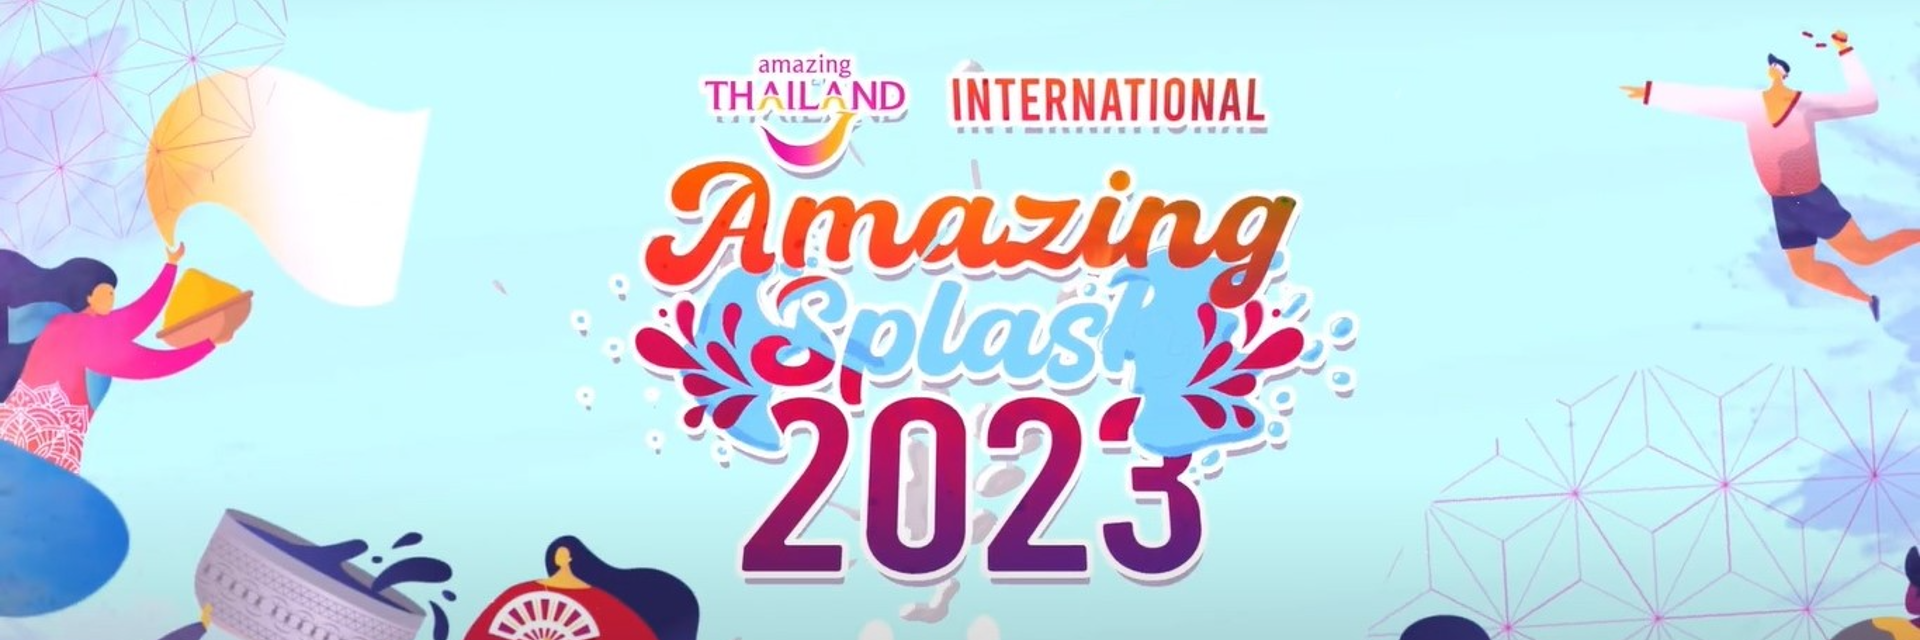 The International Amazing Splash 2023 is coming up.